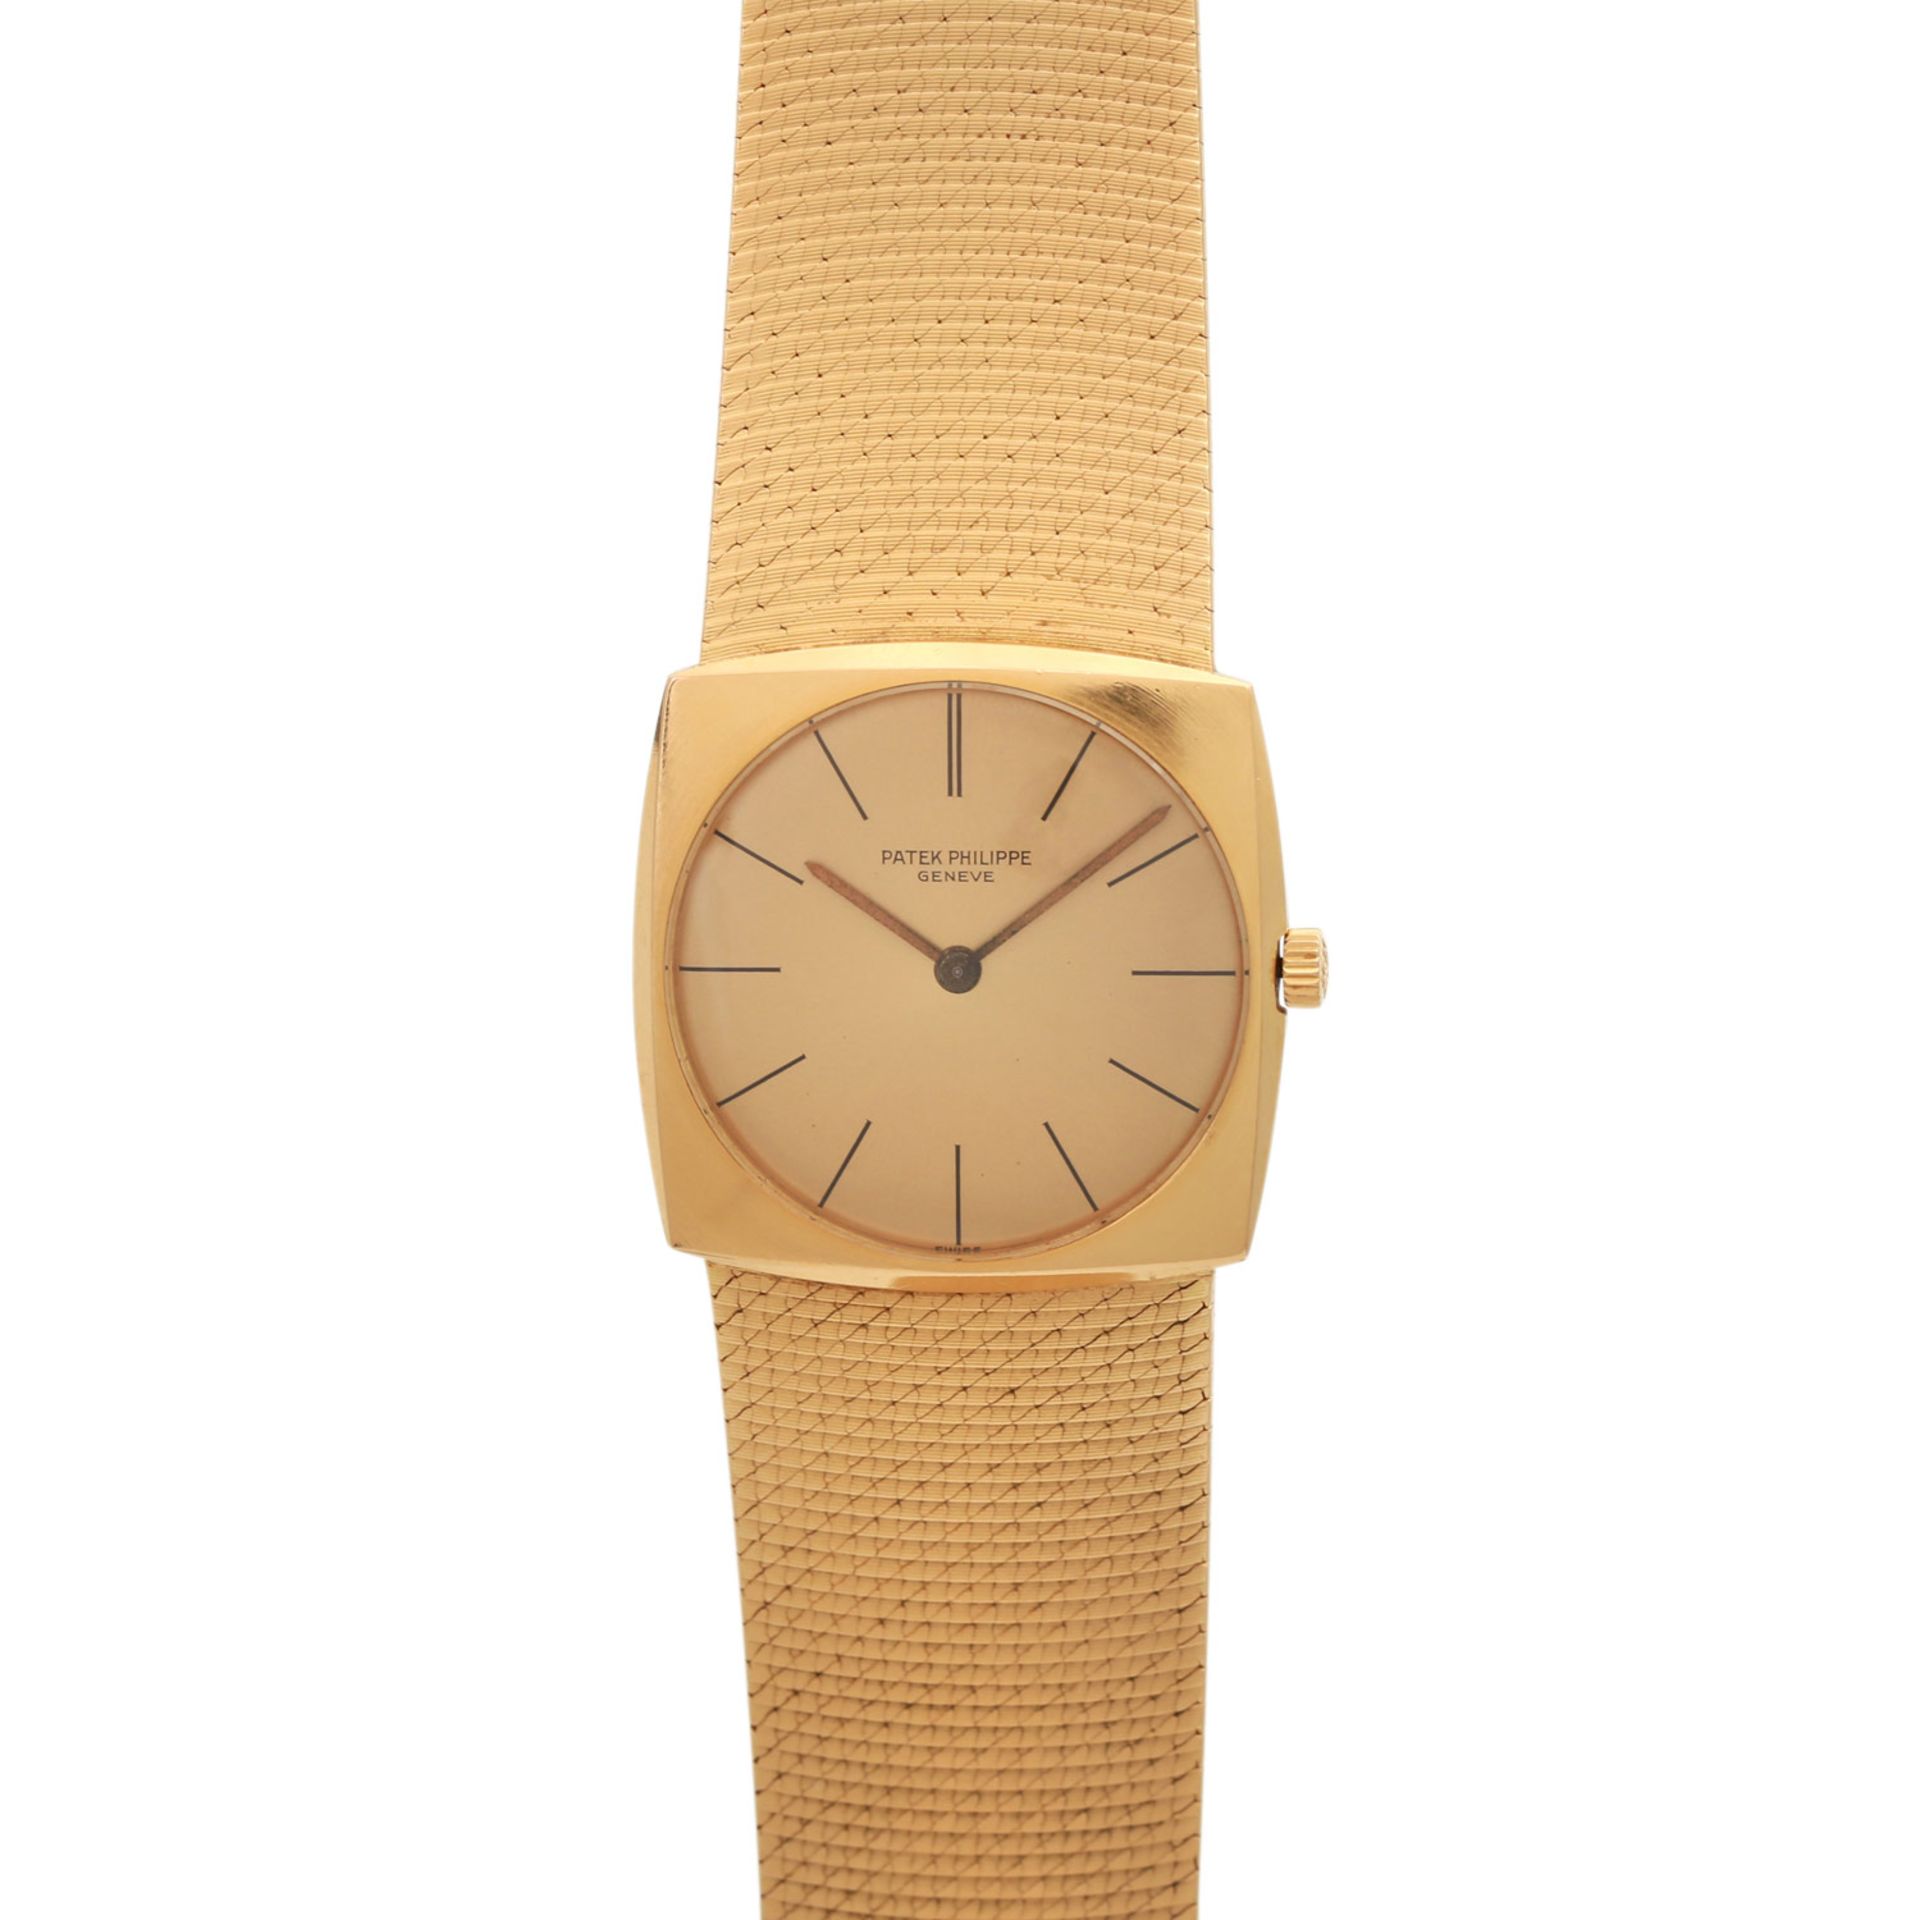 PATEK PHILIPPE Vintage Armbanduhr, Ref. 3523/1, ca. 1960er Jahre.Gold 18K. Handaufzugwerk, Cal. 175.